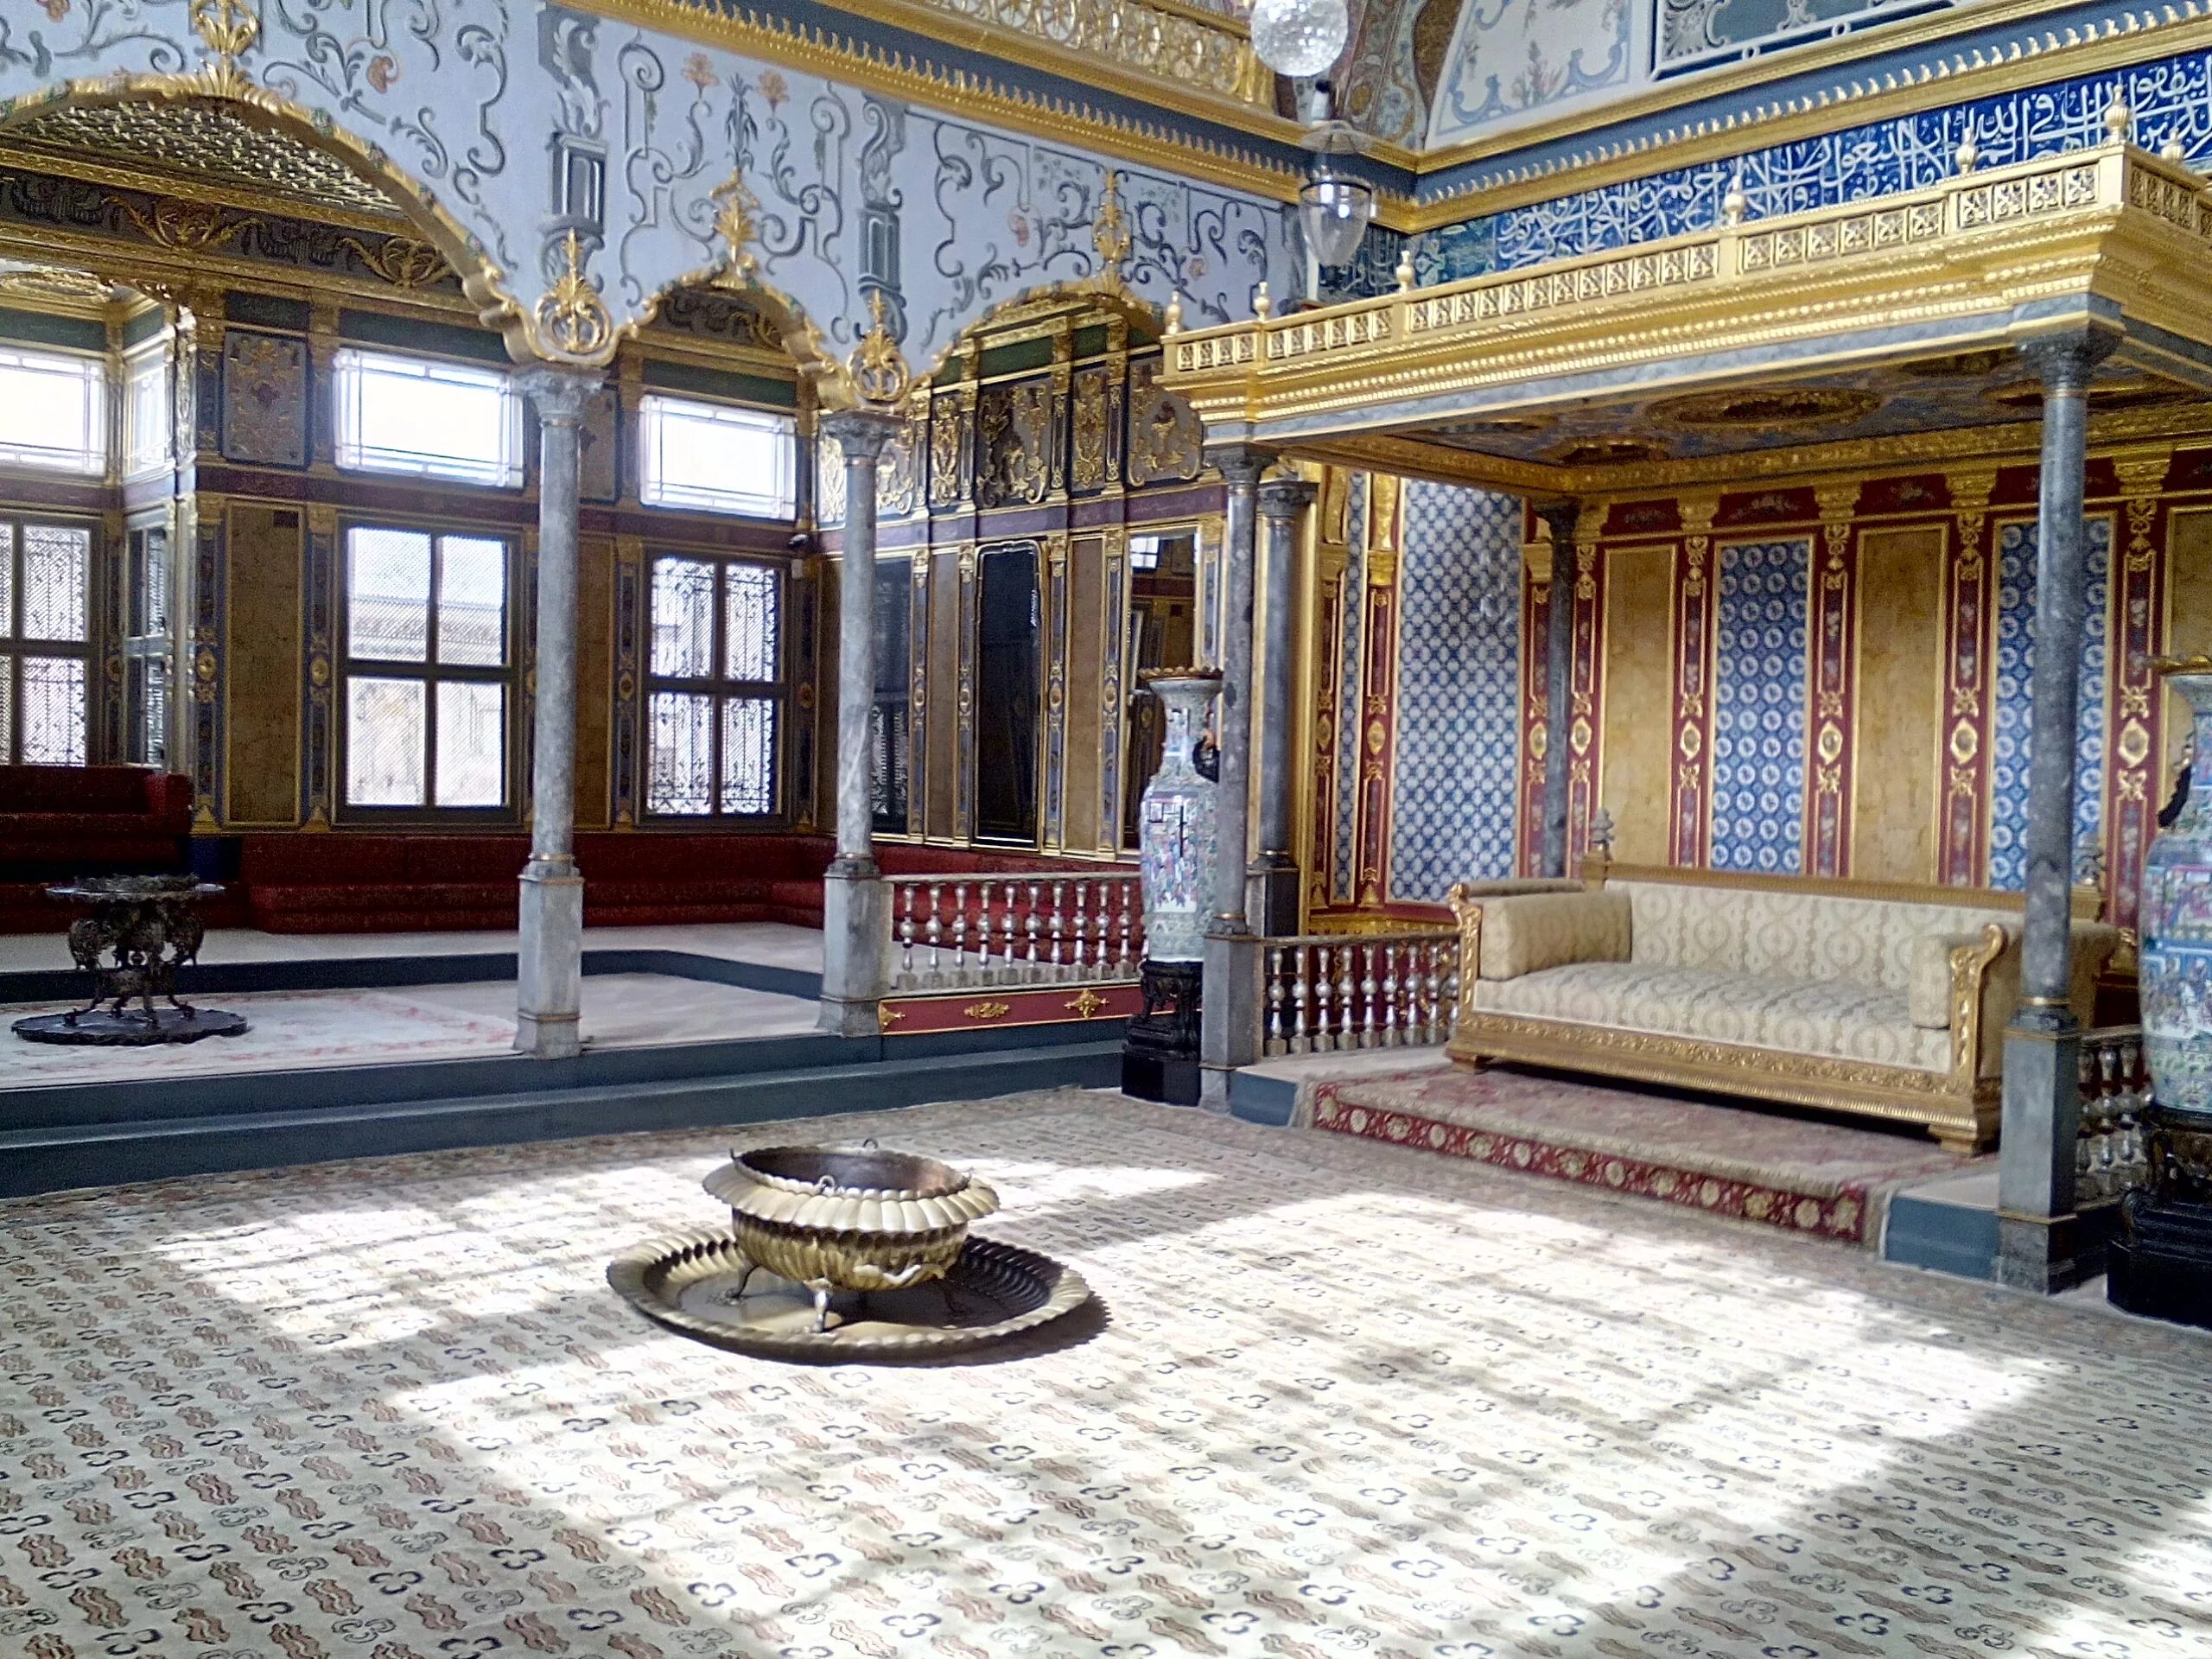 Где жили султаны. Дворец Топкапы покои Султана Сулеймана.